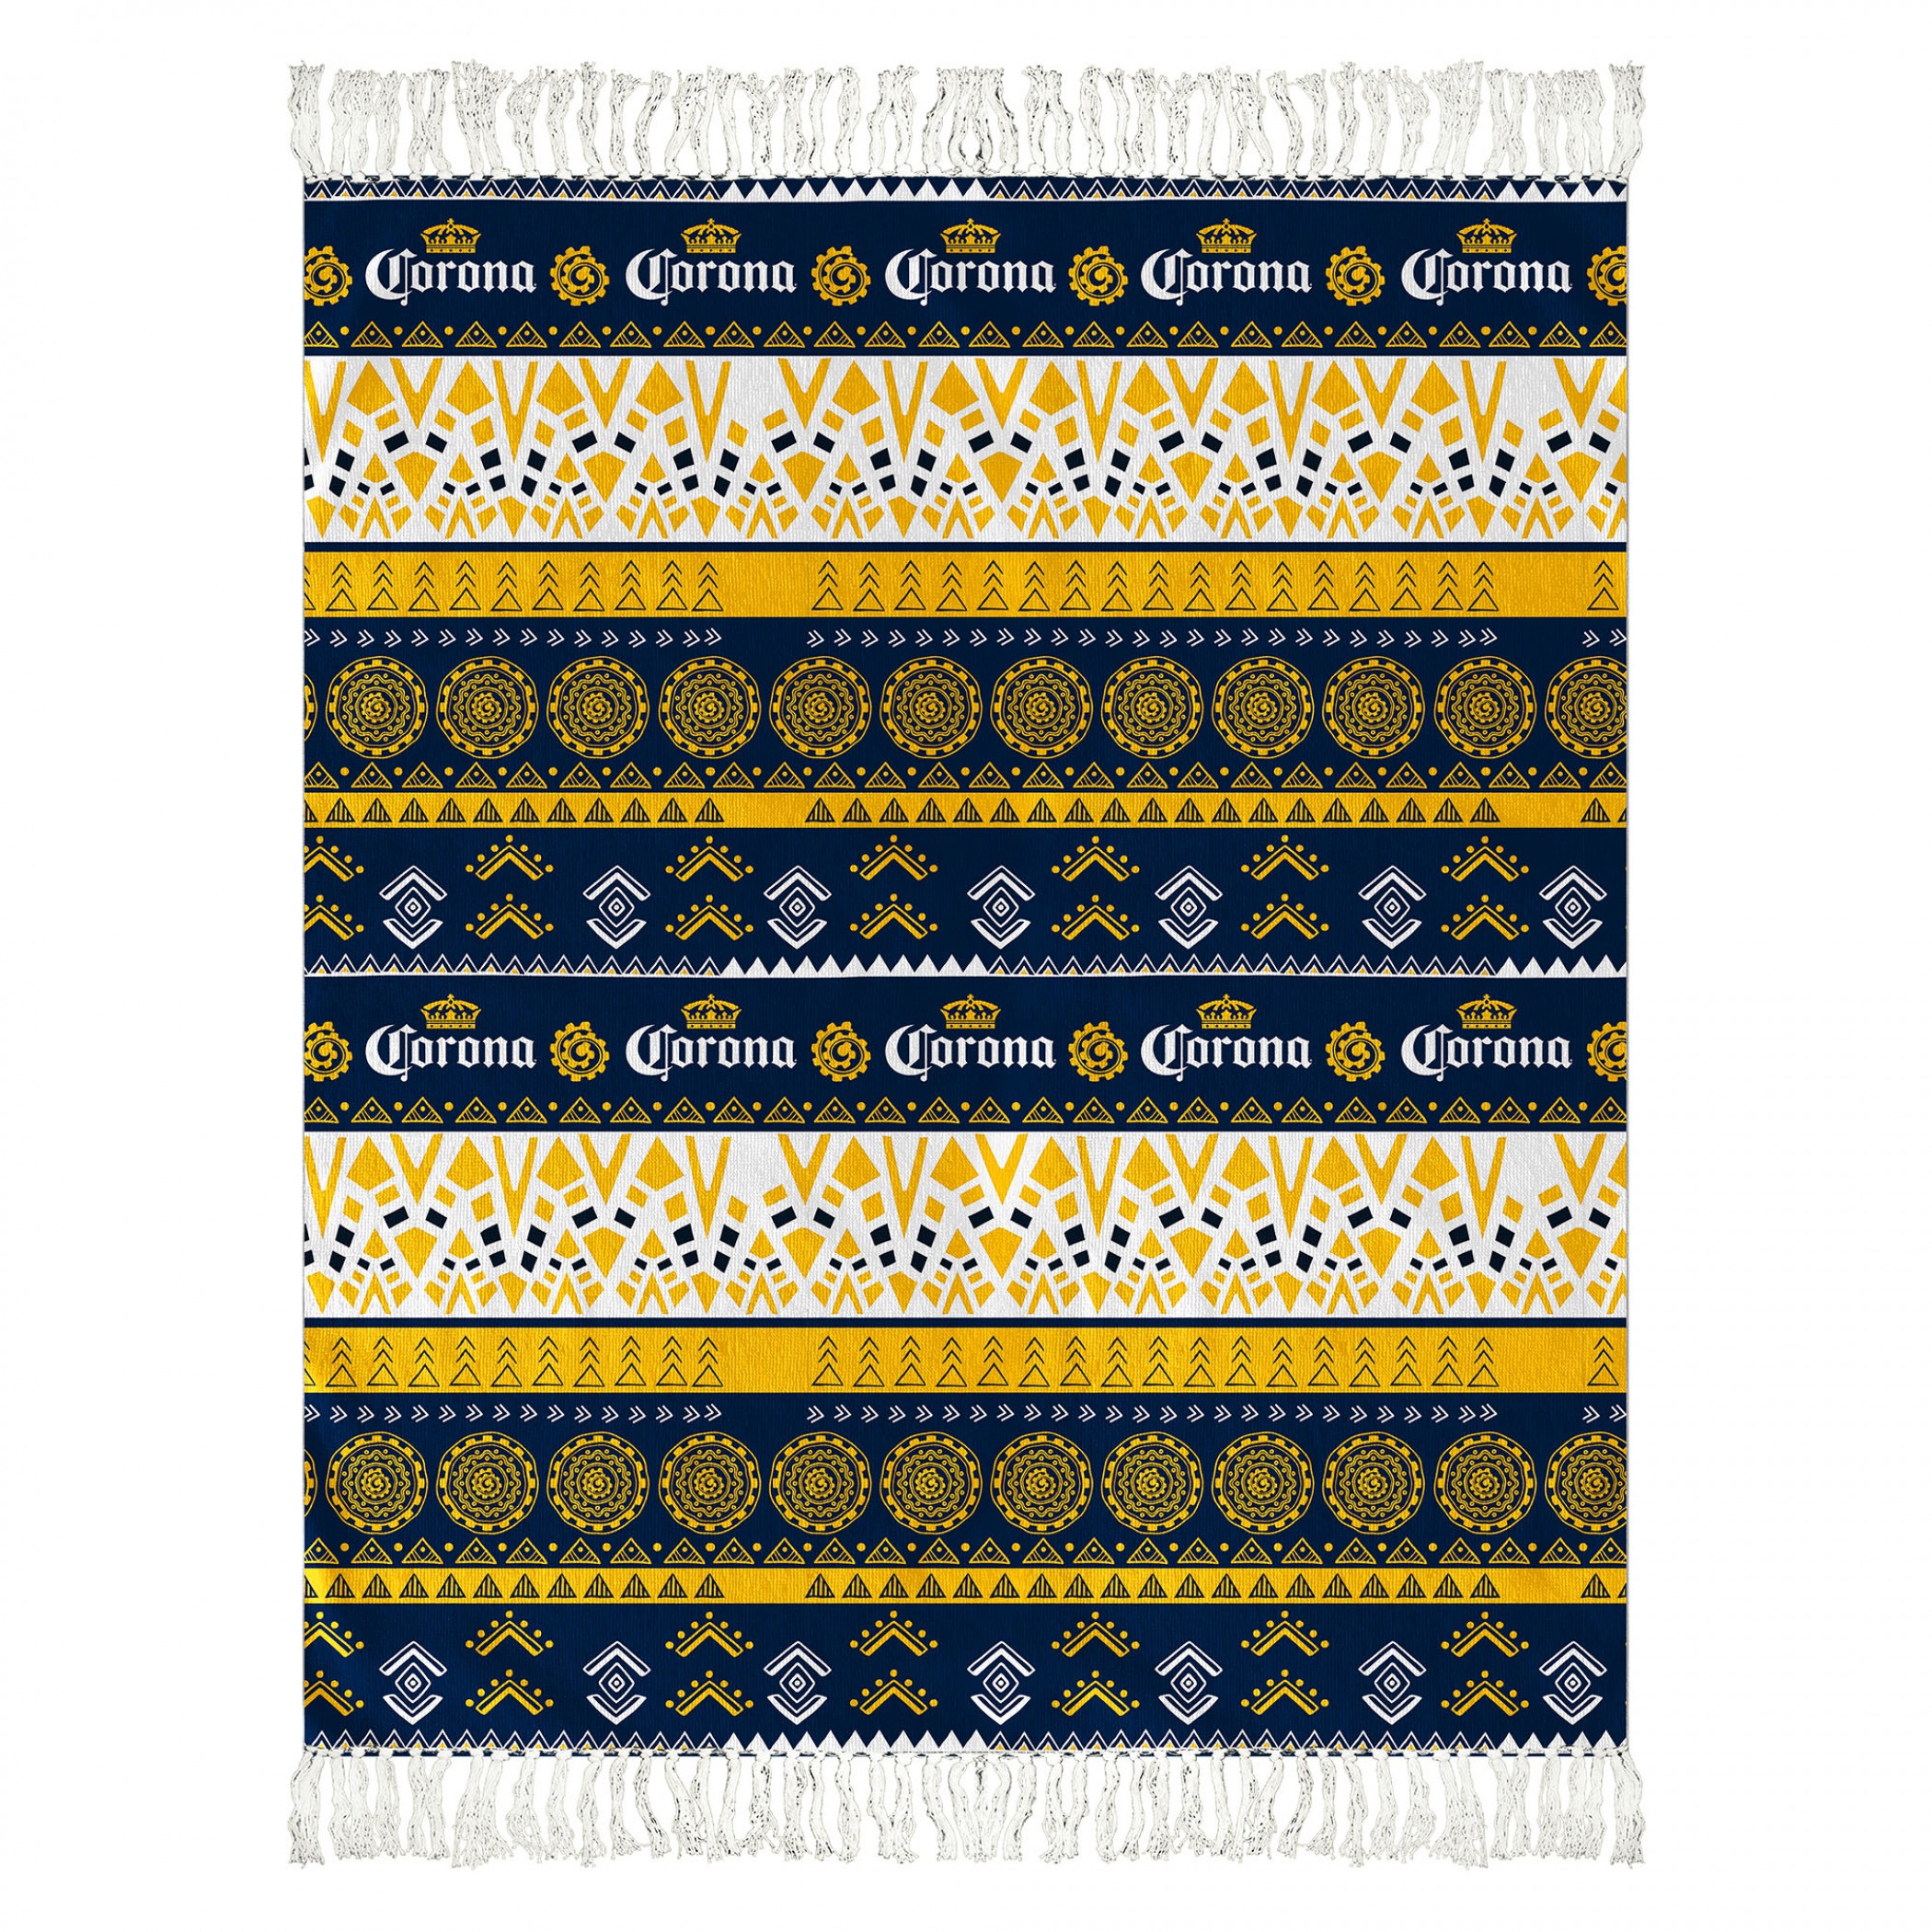 Corona Extra Fiesta Tapestry Patterns 50'x60' Beach Throw with Tassels